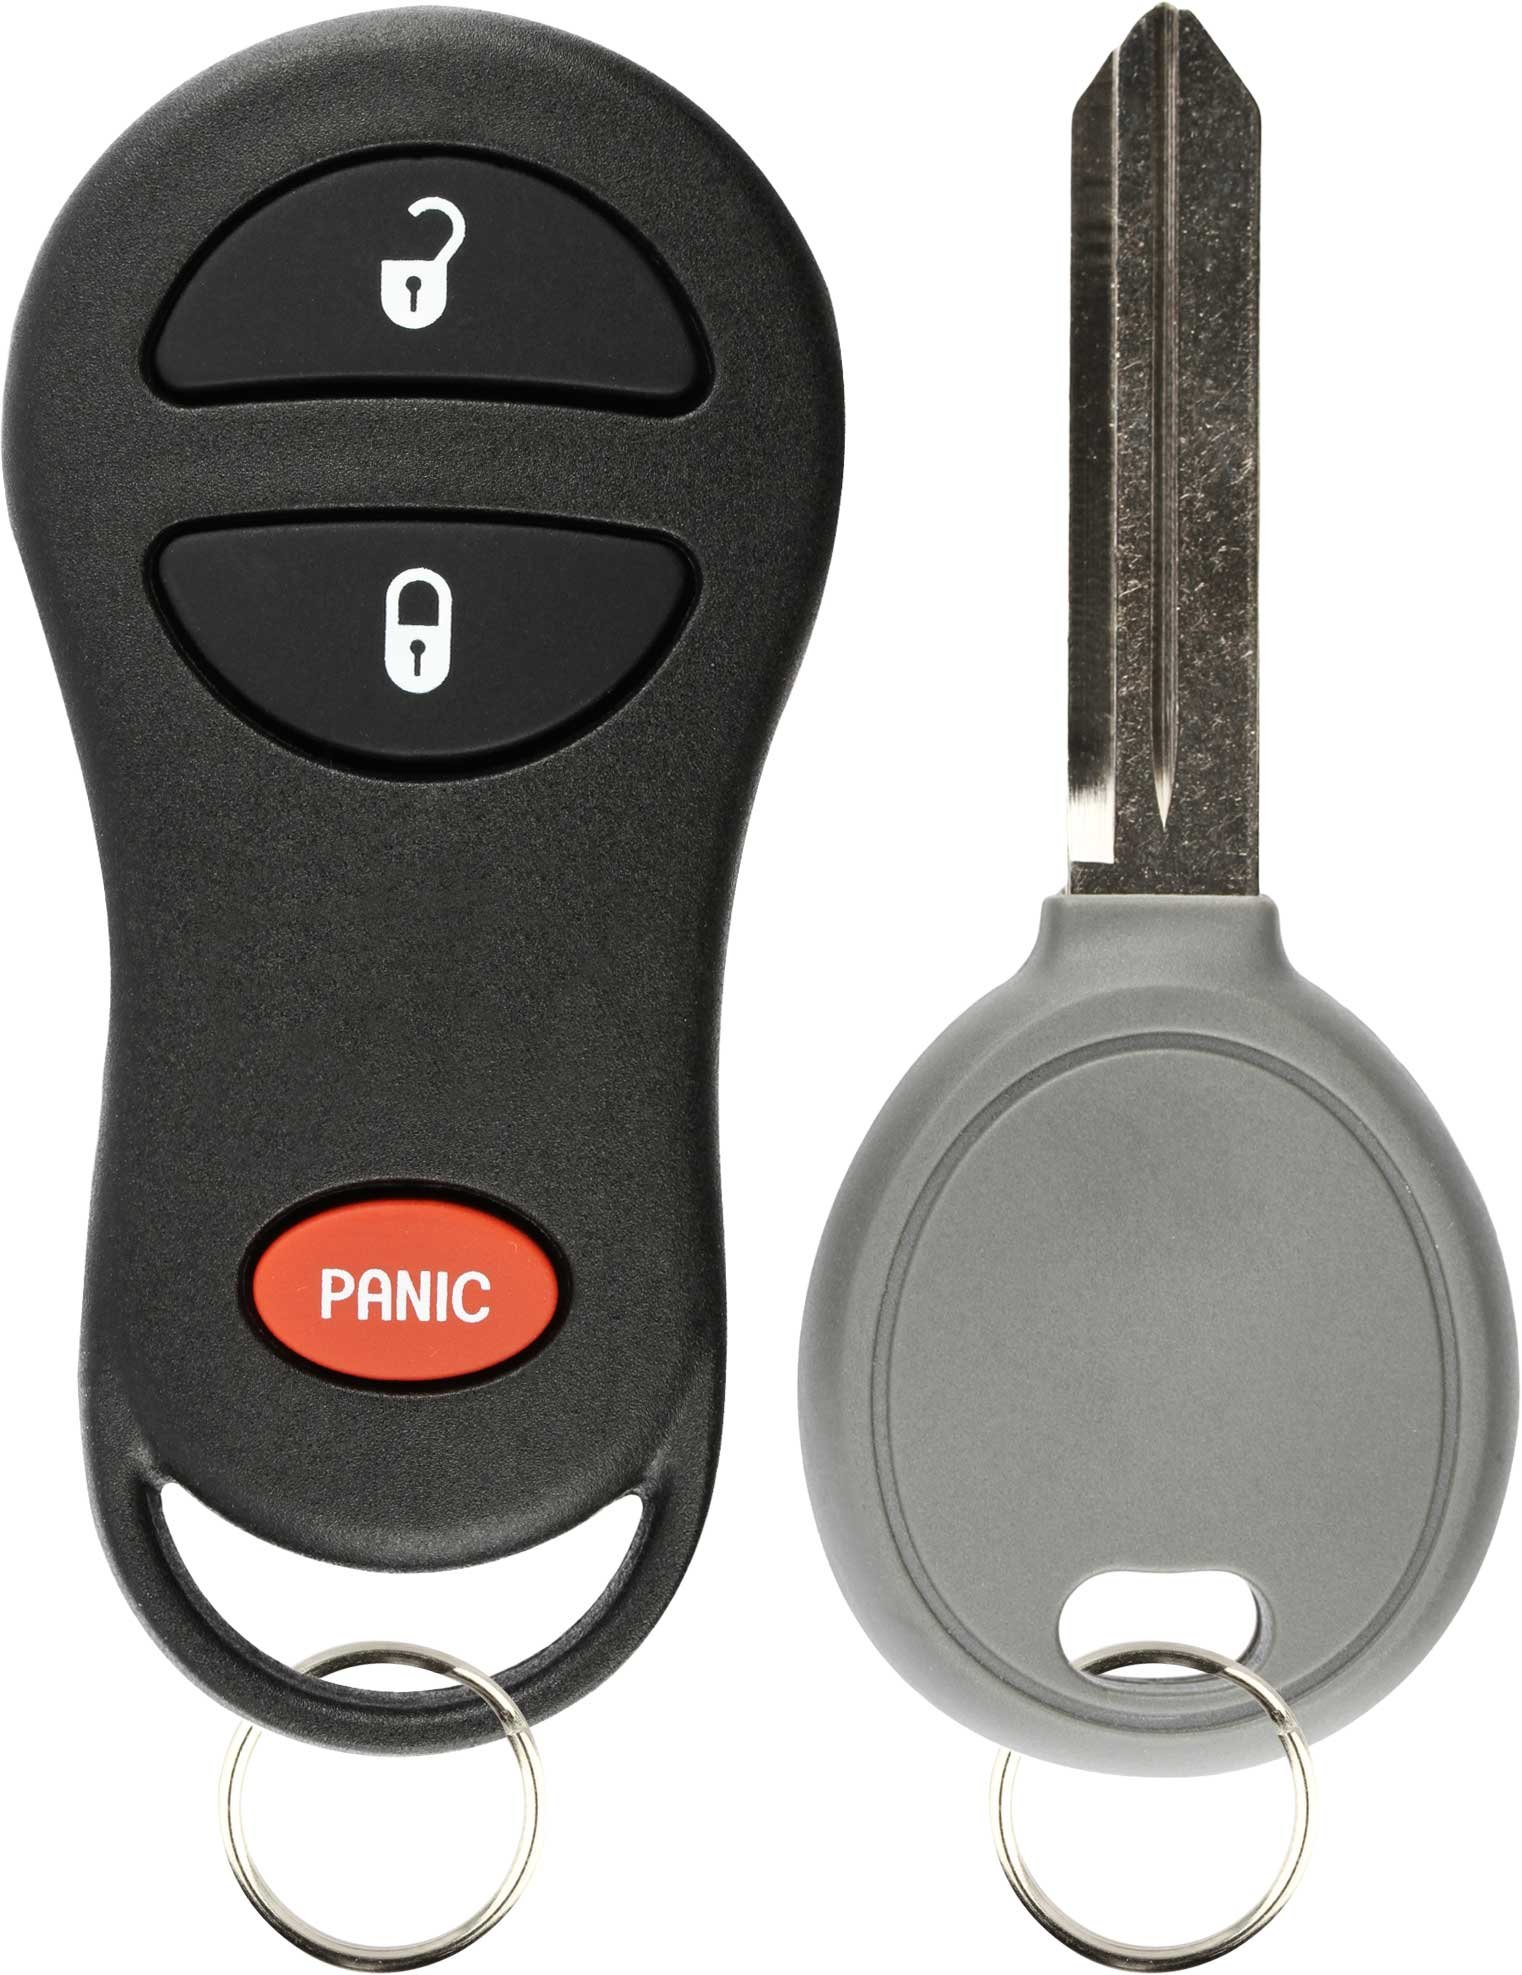 KeylessOption Keyless Entry Remote Fob Uncut Ignition Car Key Replacement for GQ43VT17T, 04686481 von KeylessOption